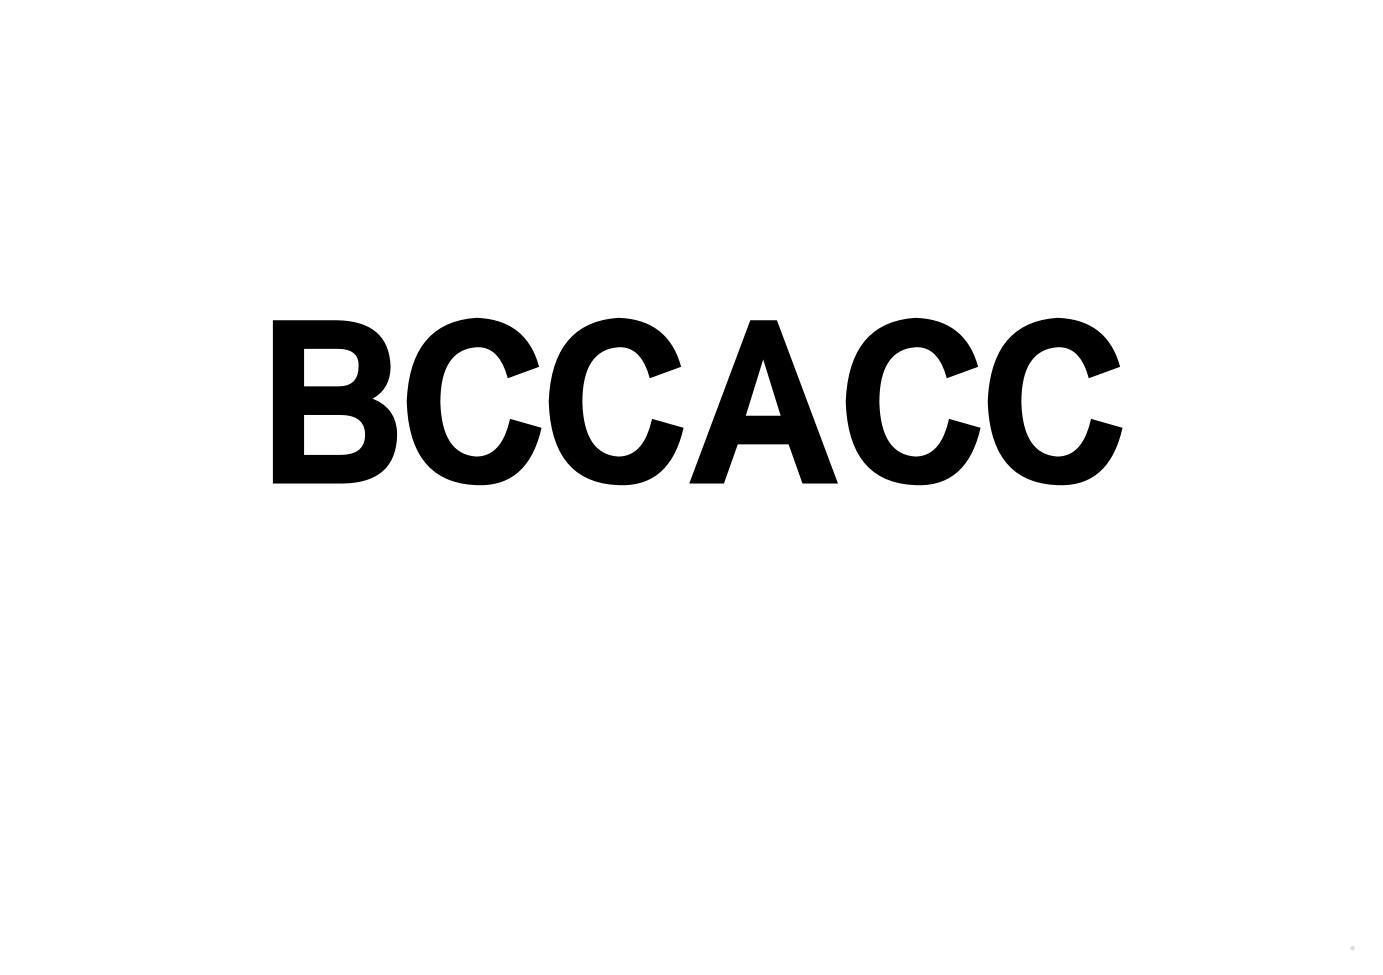 BCCACC